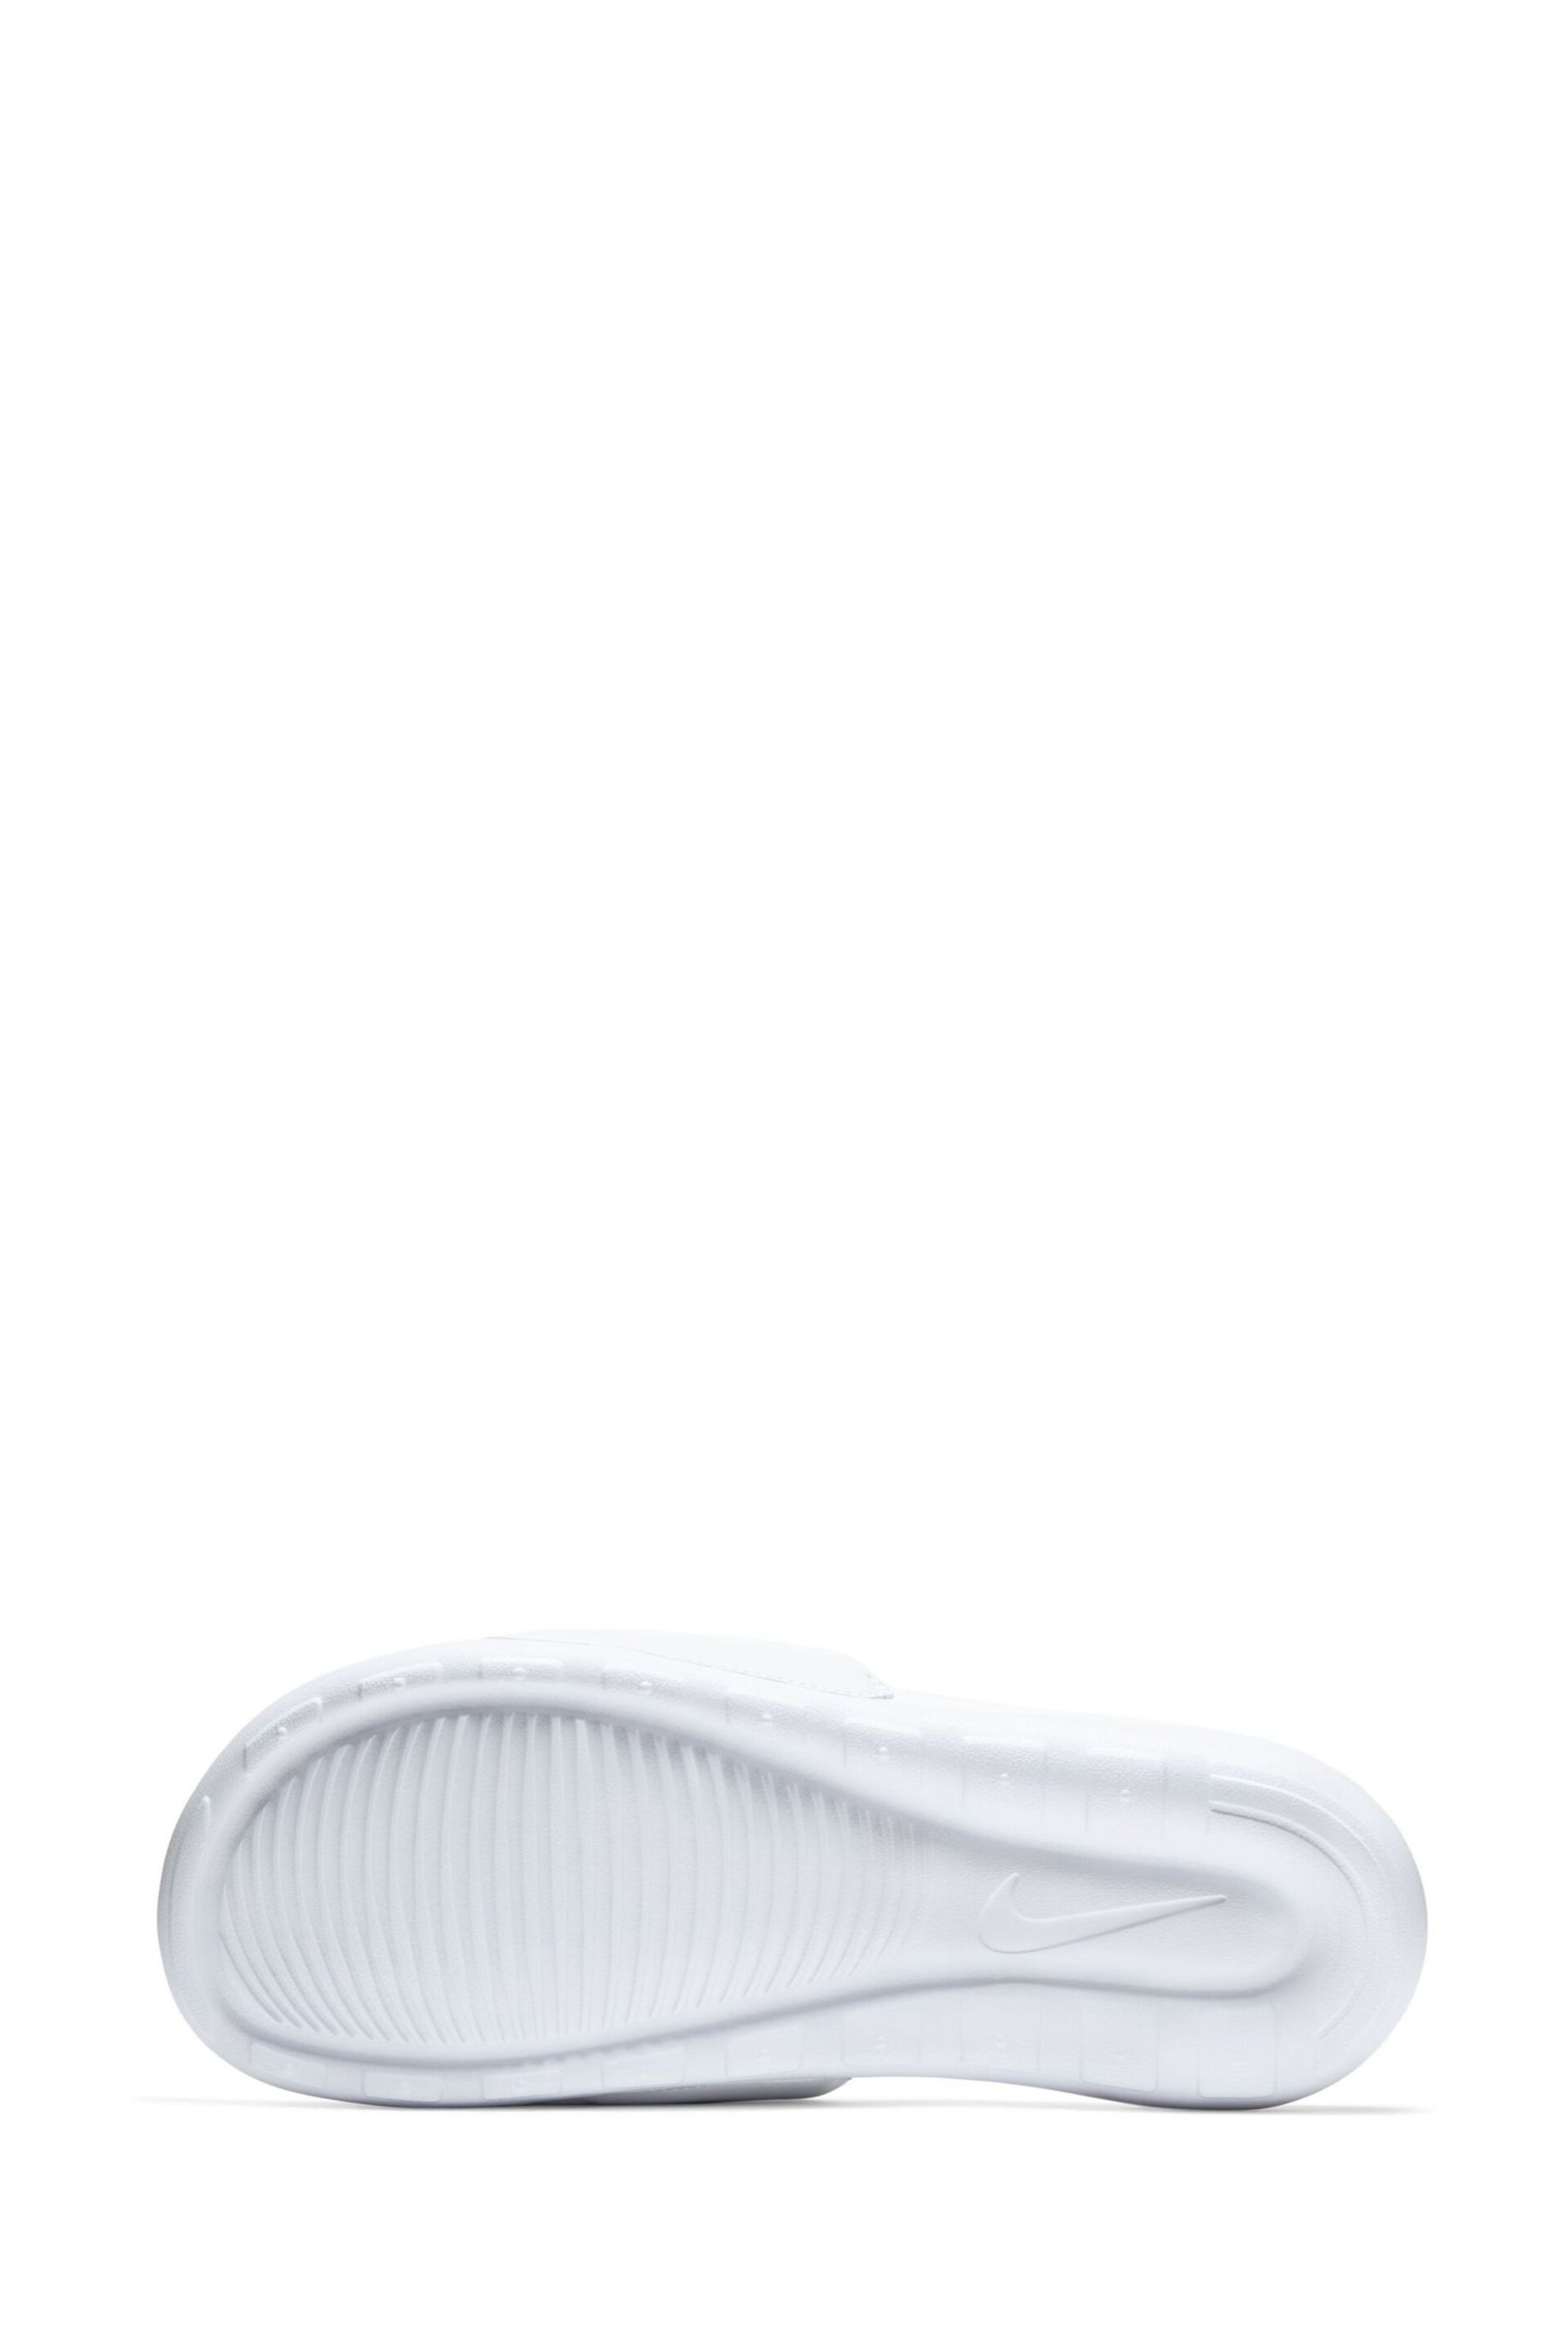 Nike White/Black Victori One Sliders - Image 6 of 8